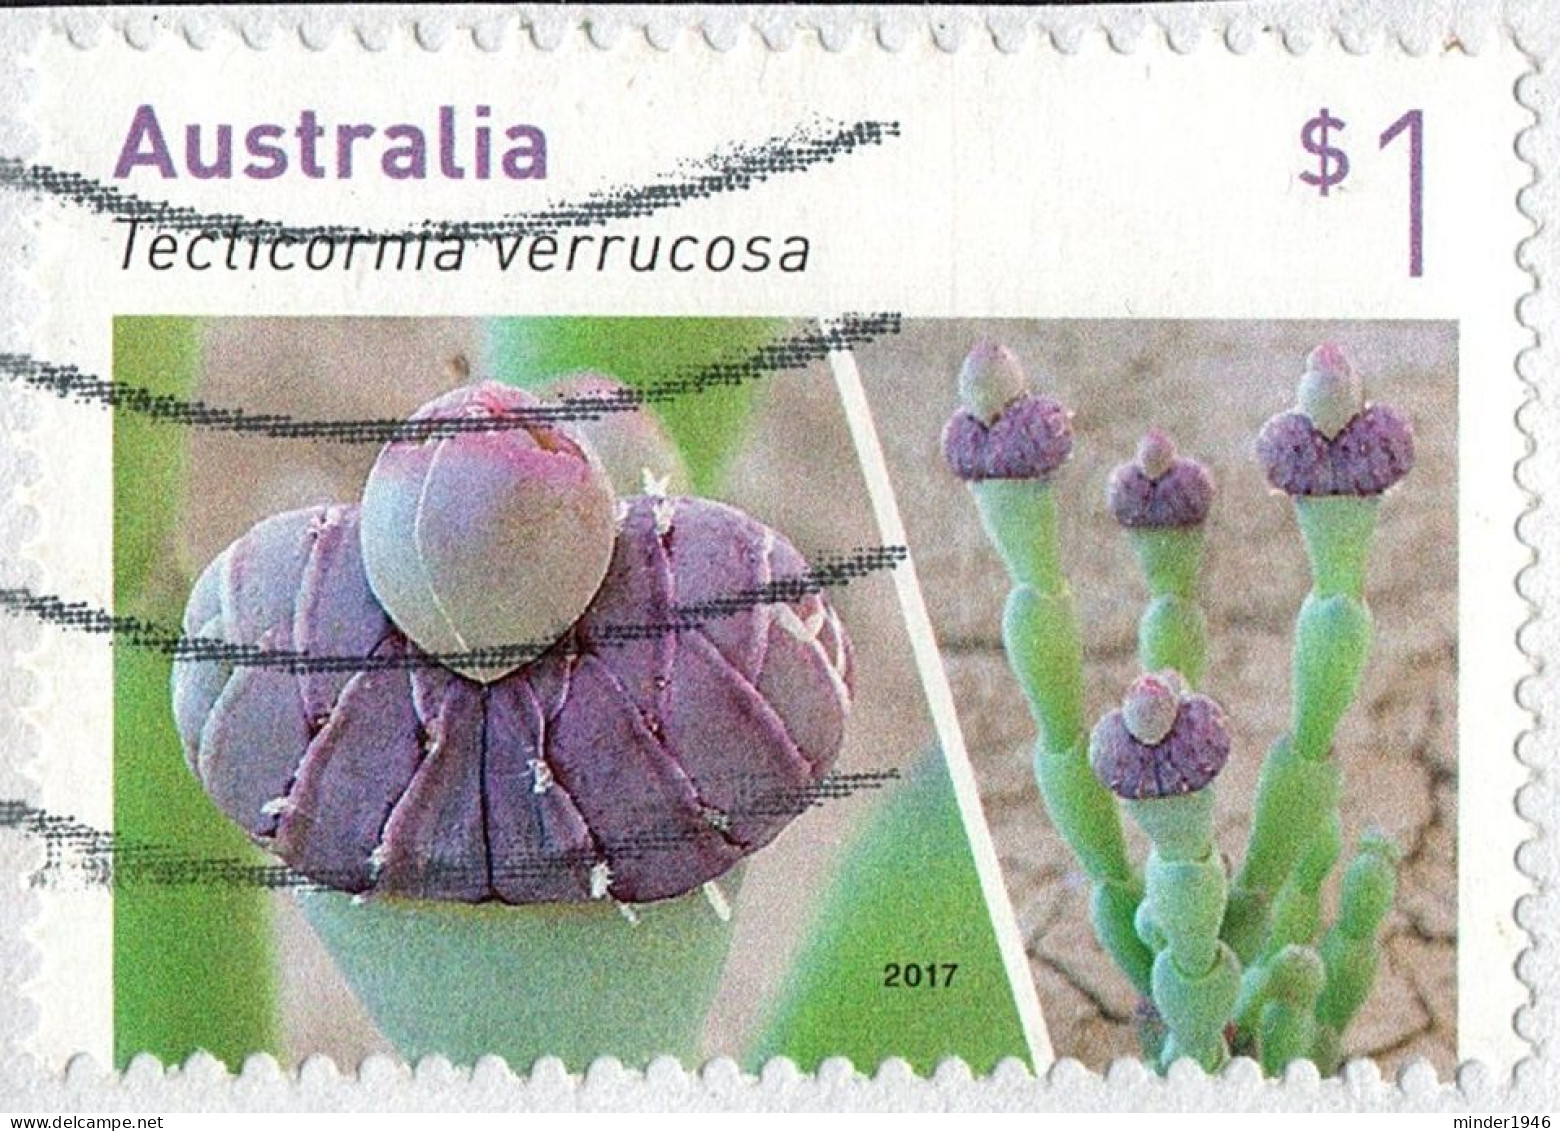 AUSTRALIA 2017 $1 Multicoloured, Australian Succulents-Tecticornia Verrucosa Self Adhesive SG4750 Used - Used Stamps